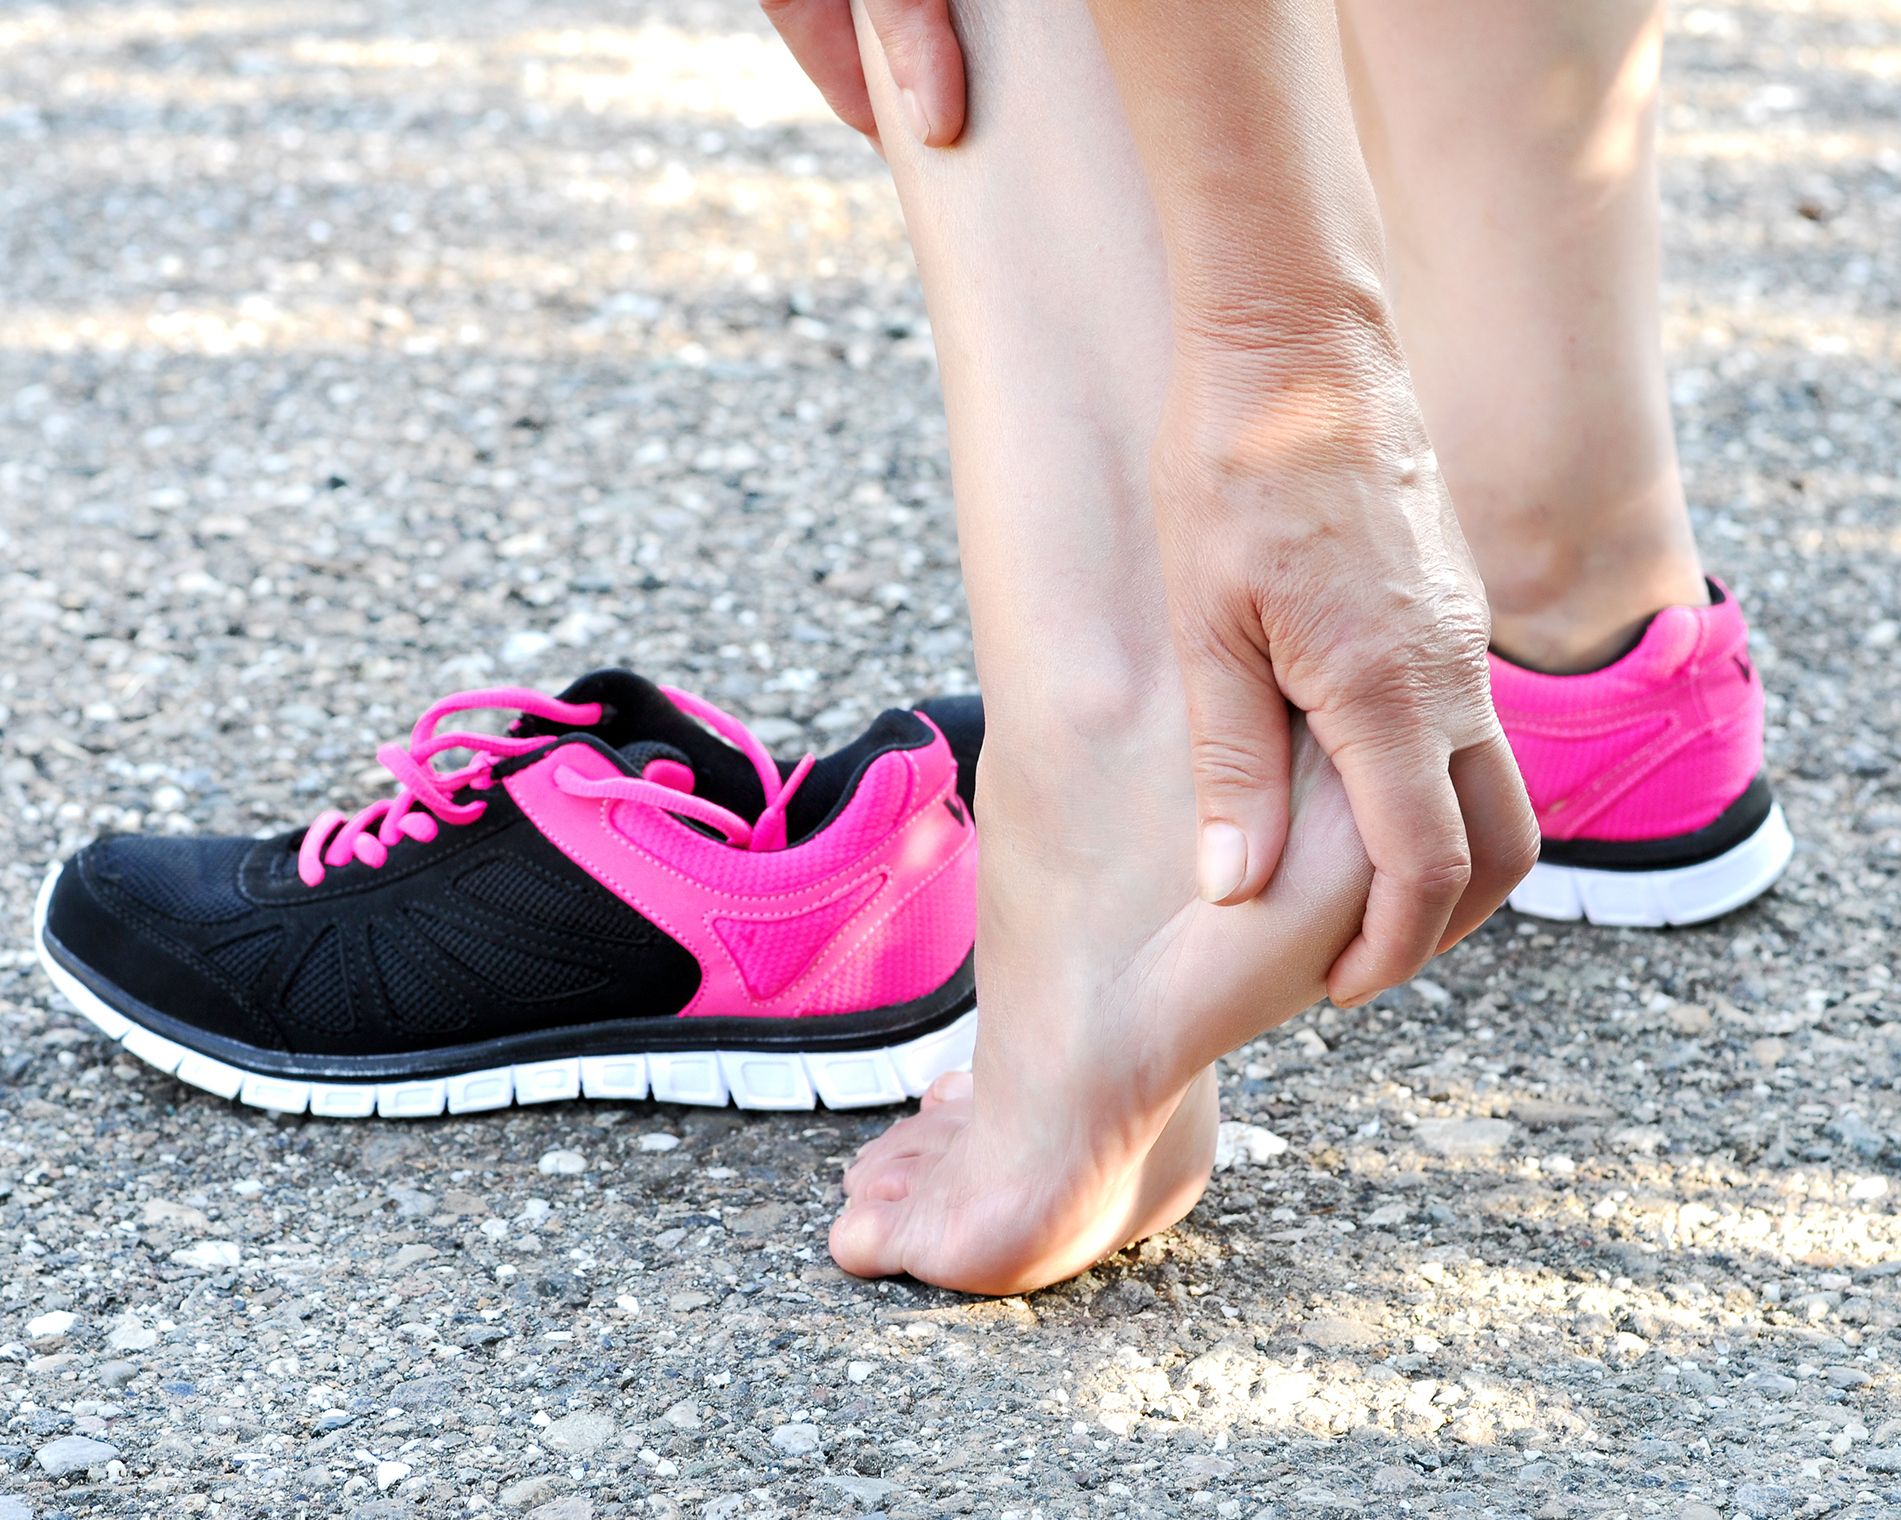 Running Pains: The Injury Report for Metatarsalgia